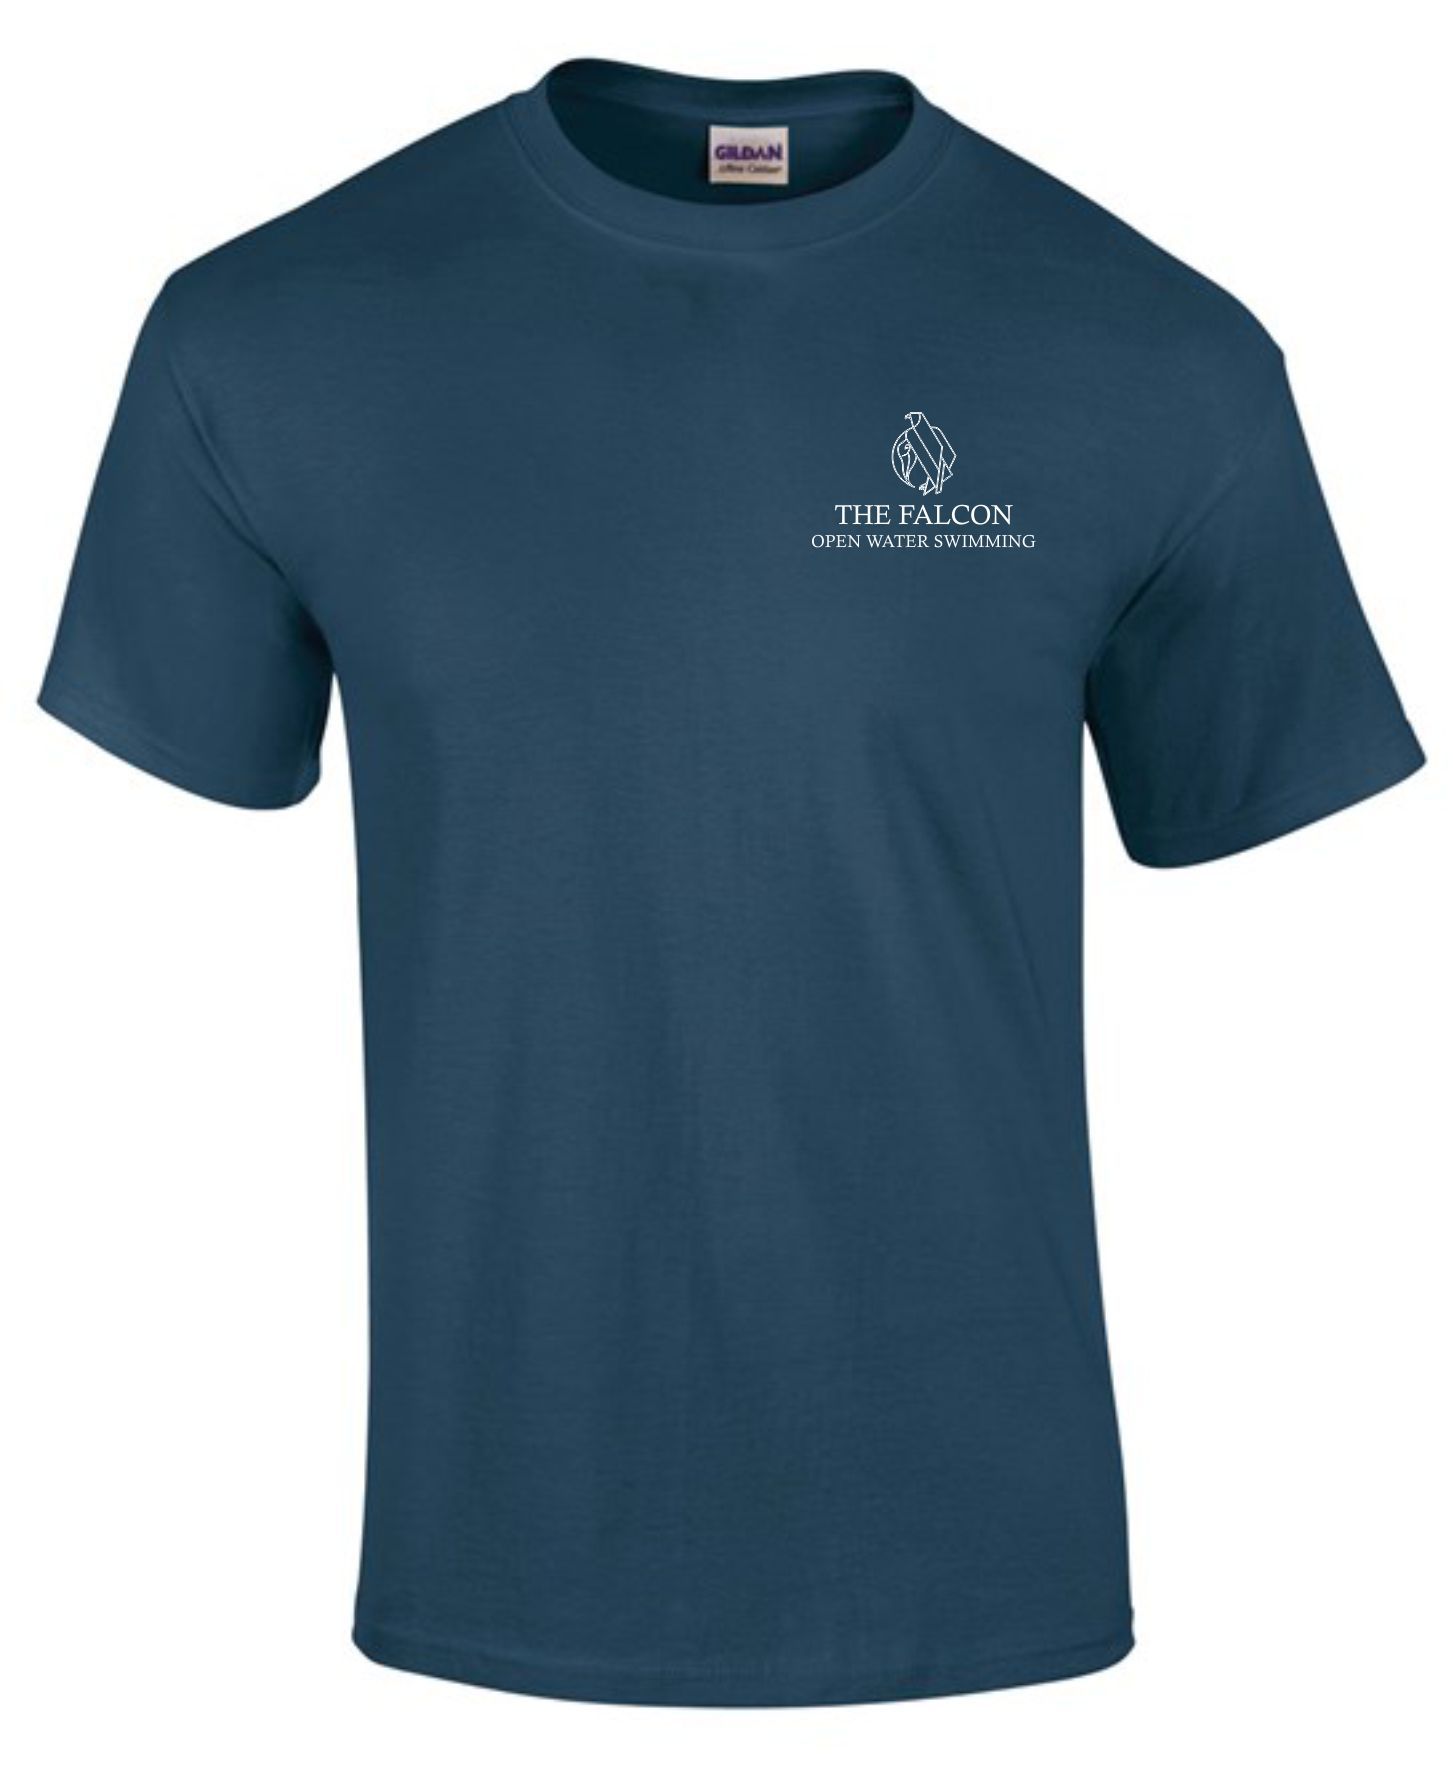 The Falcon Open Water Swimming - Standard Blue Falcon T-Shirt (Unisex)